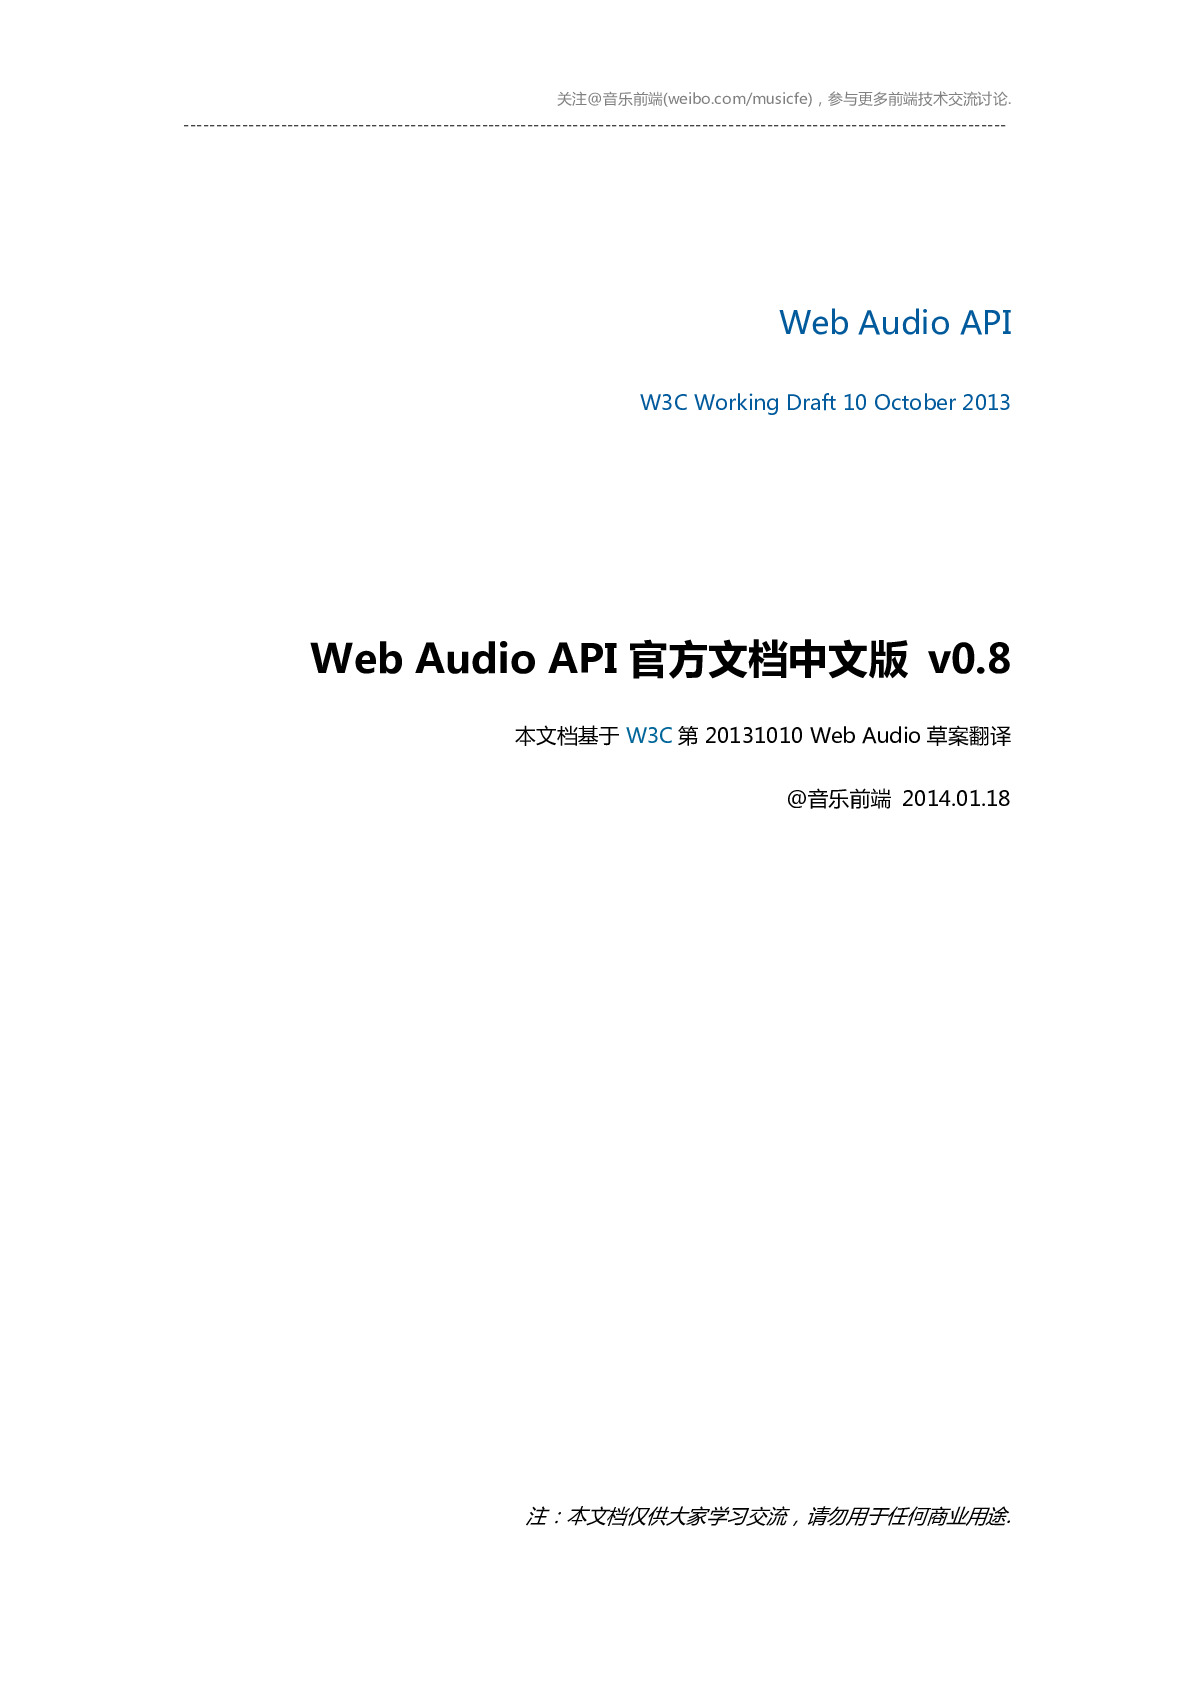 WebAudioAPI官方文档中文版ver0.8